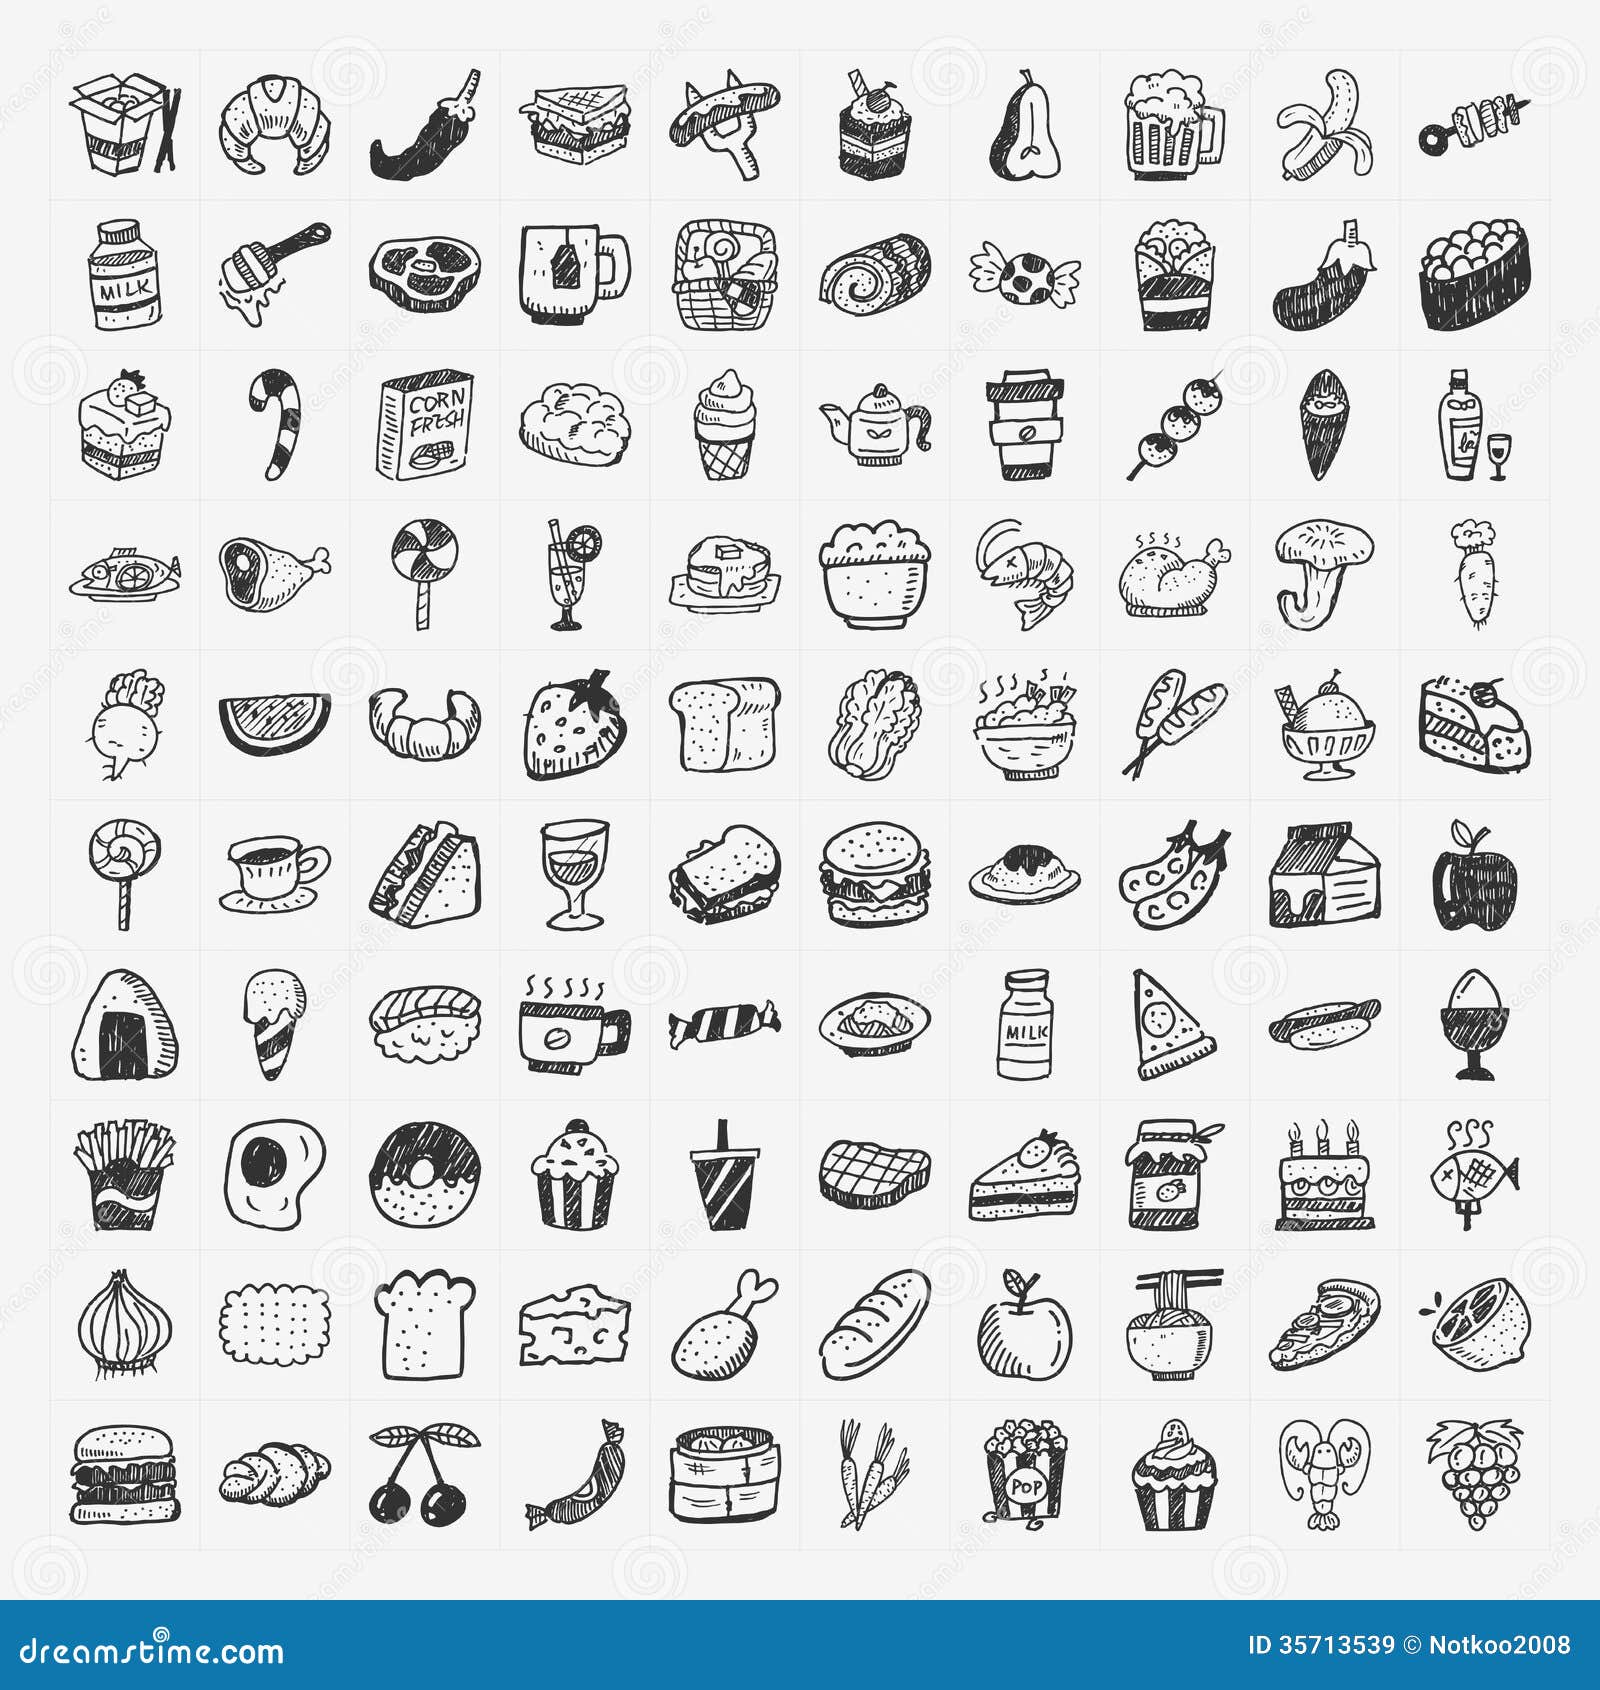 doodle food icons set